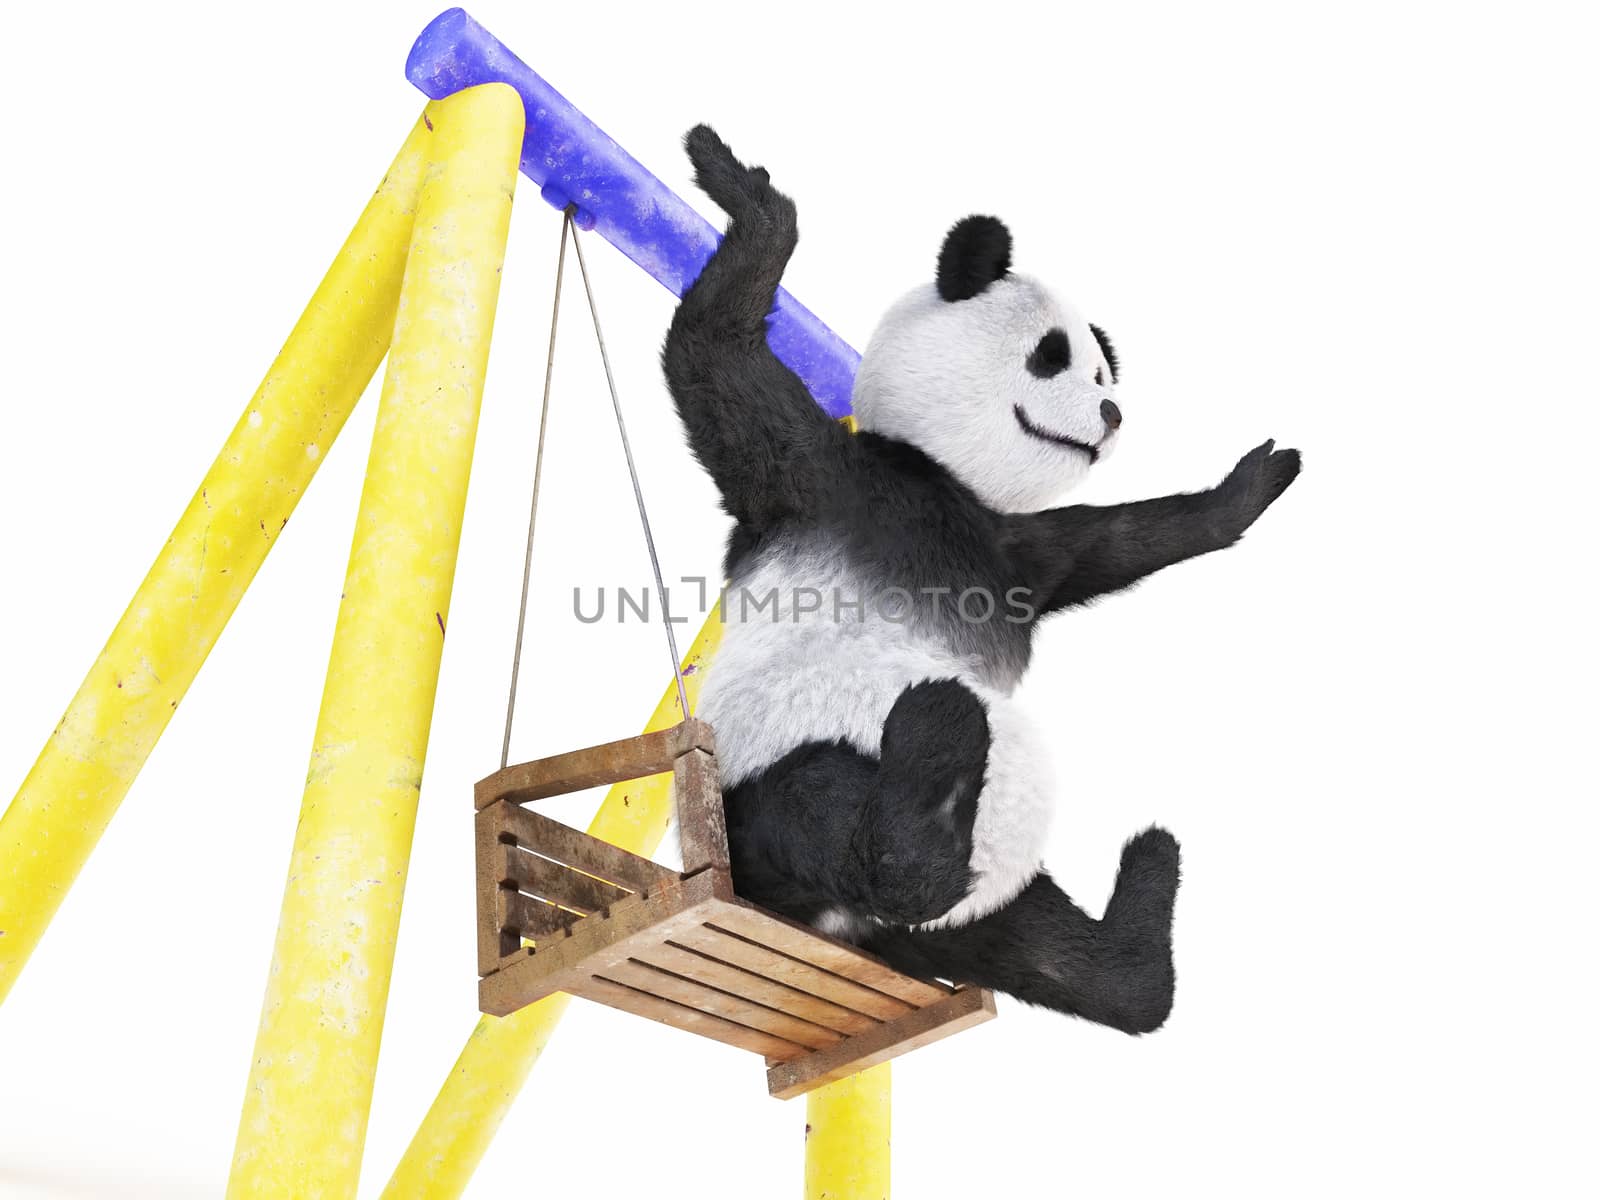 chineese cheerful character panda fluffy animal by xtate